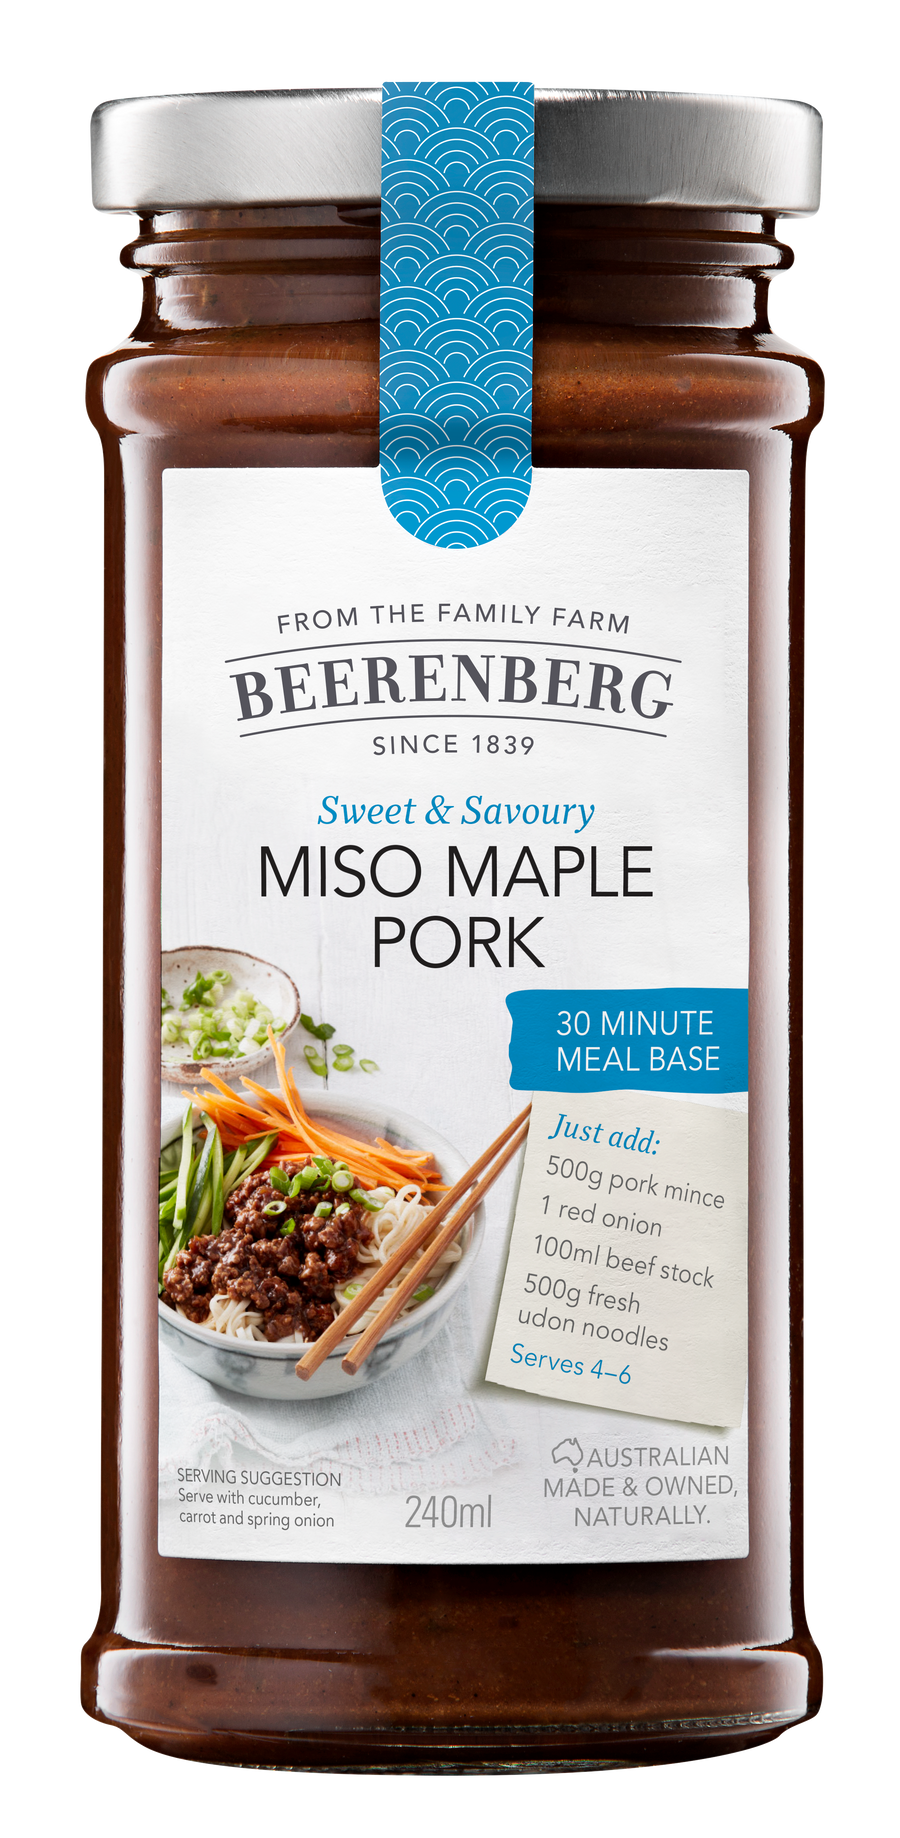 Miso Maple Pork 30 Minute Meal Base